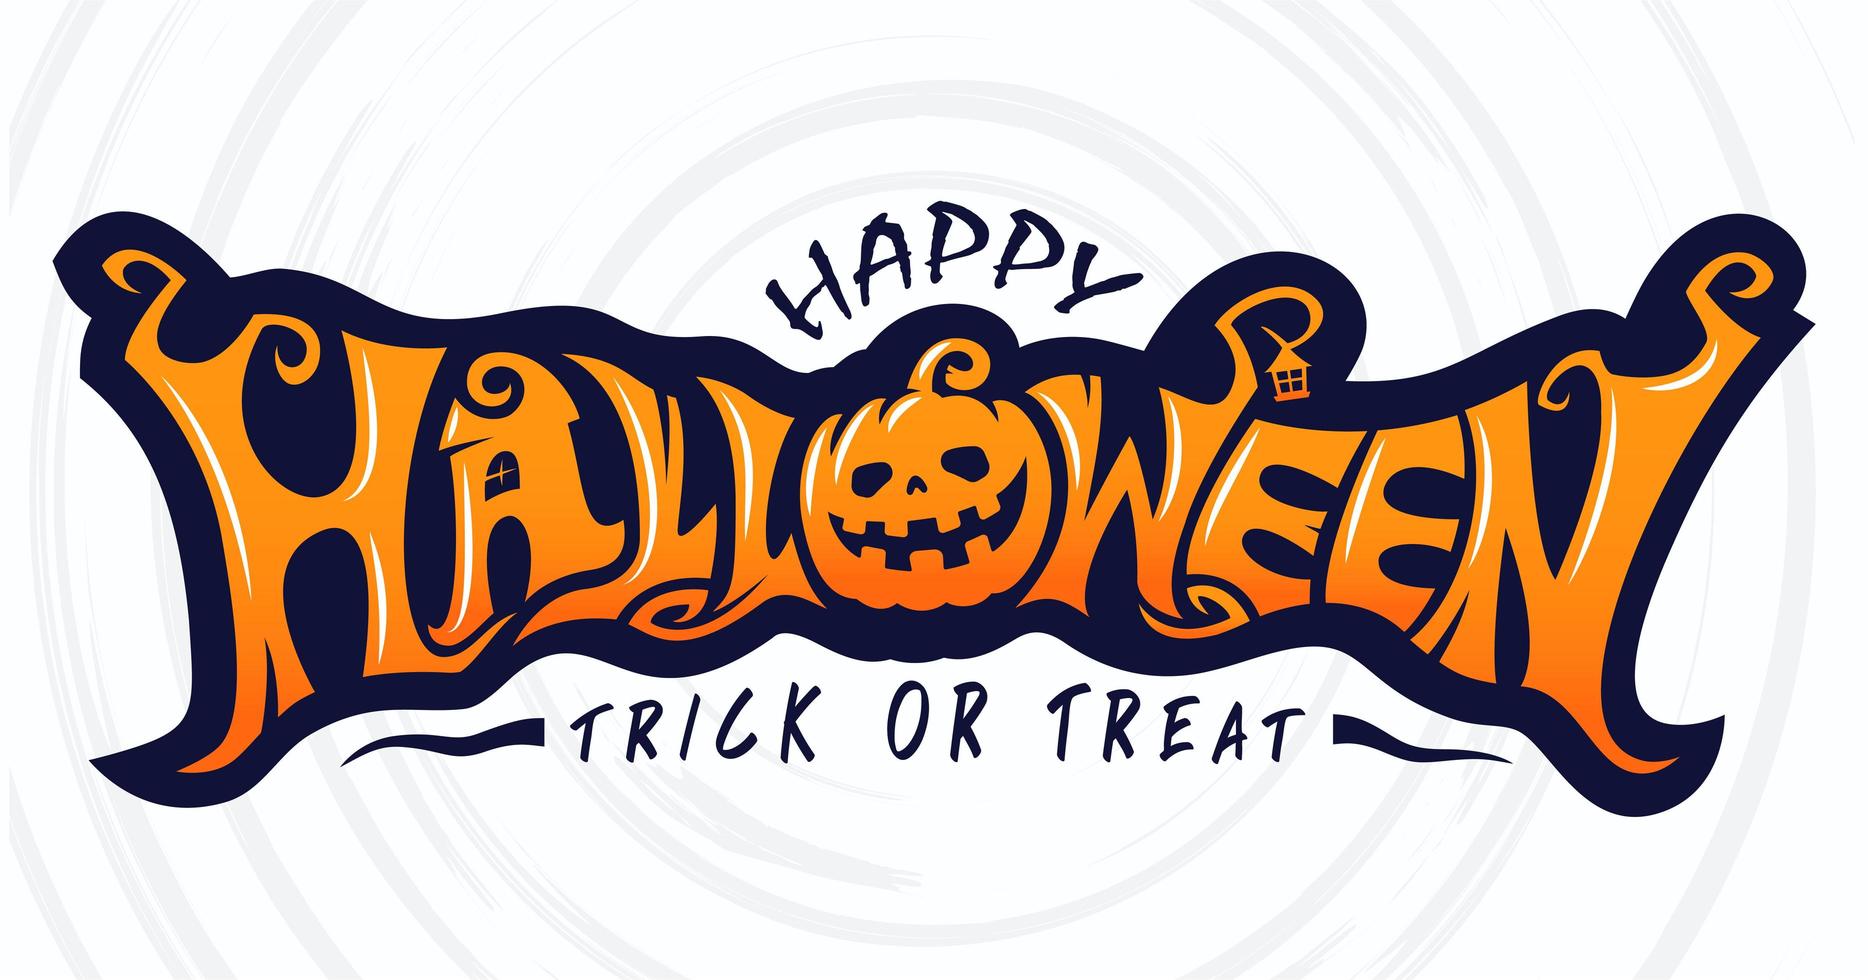 Happy Halloween Trick or Treat Text Banner vektor